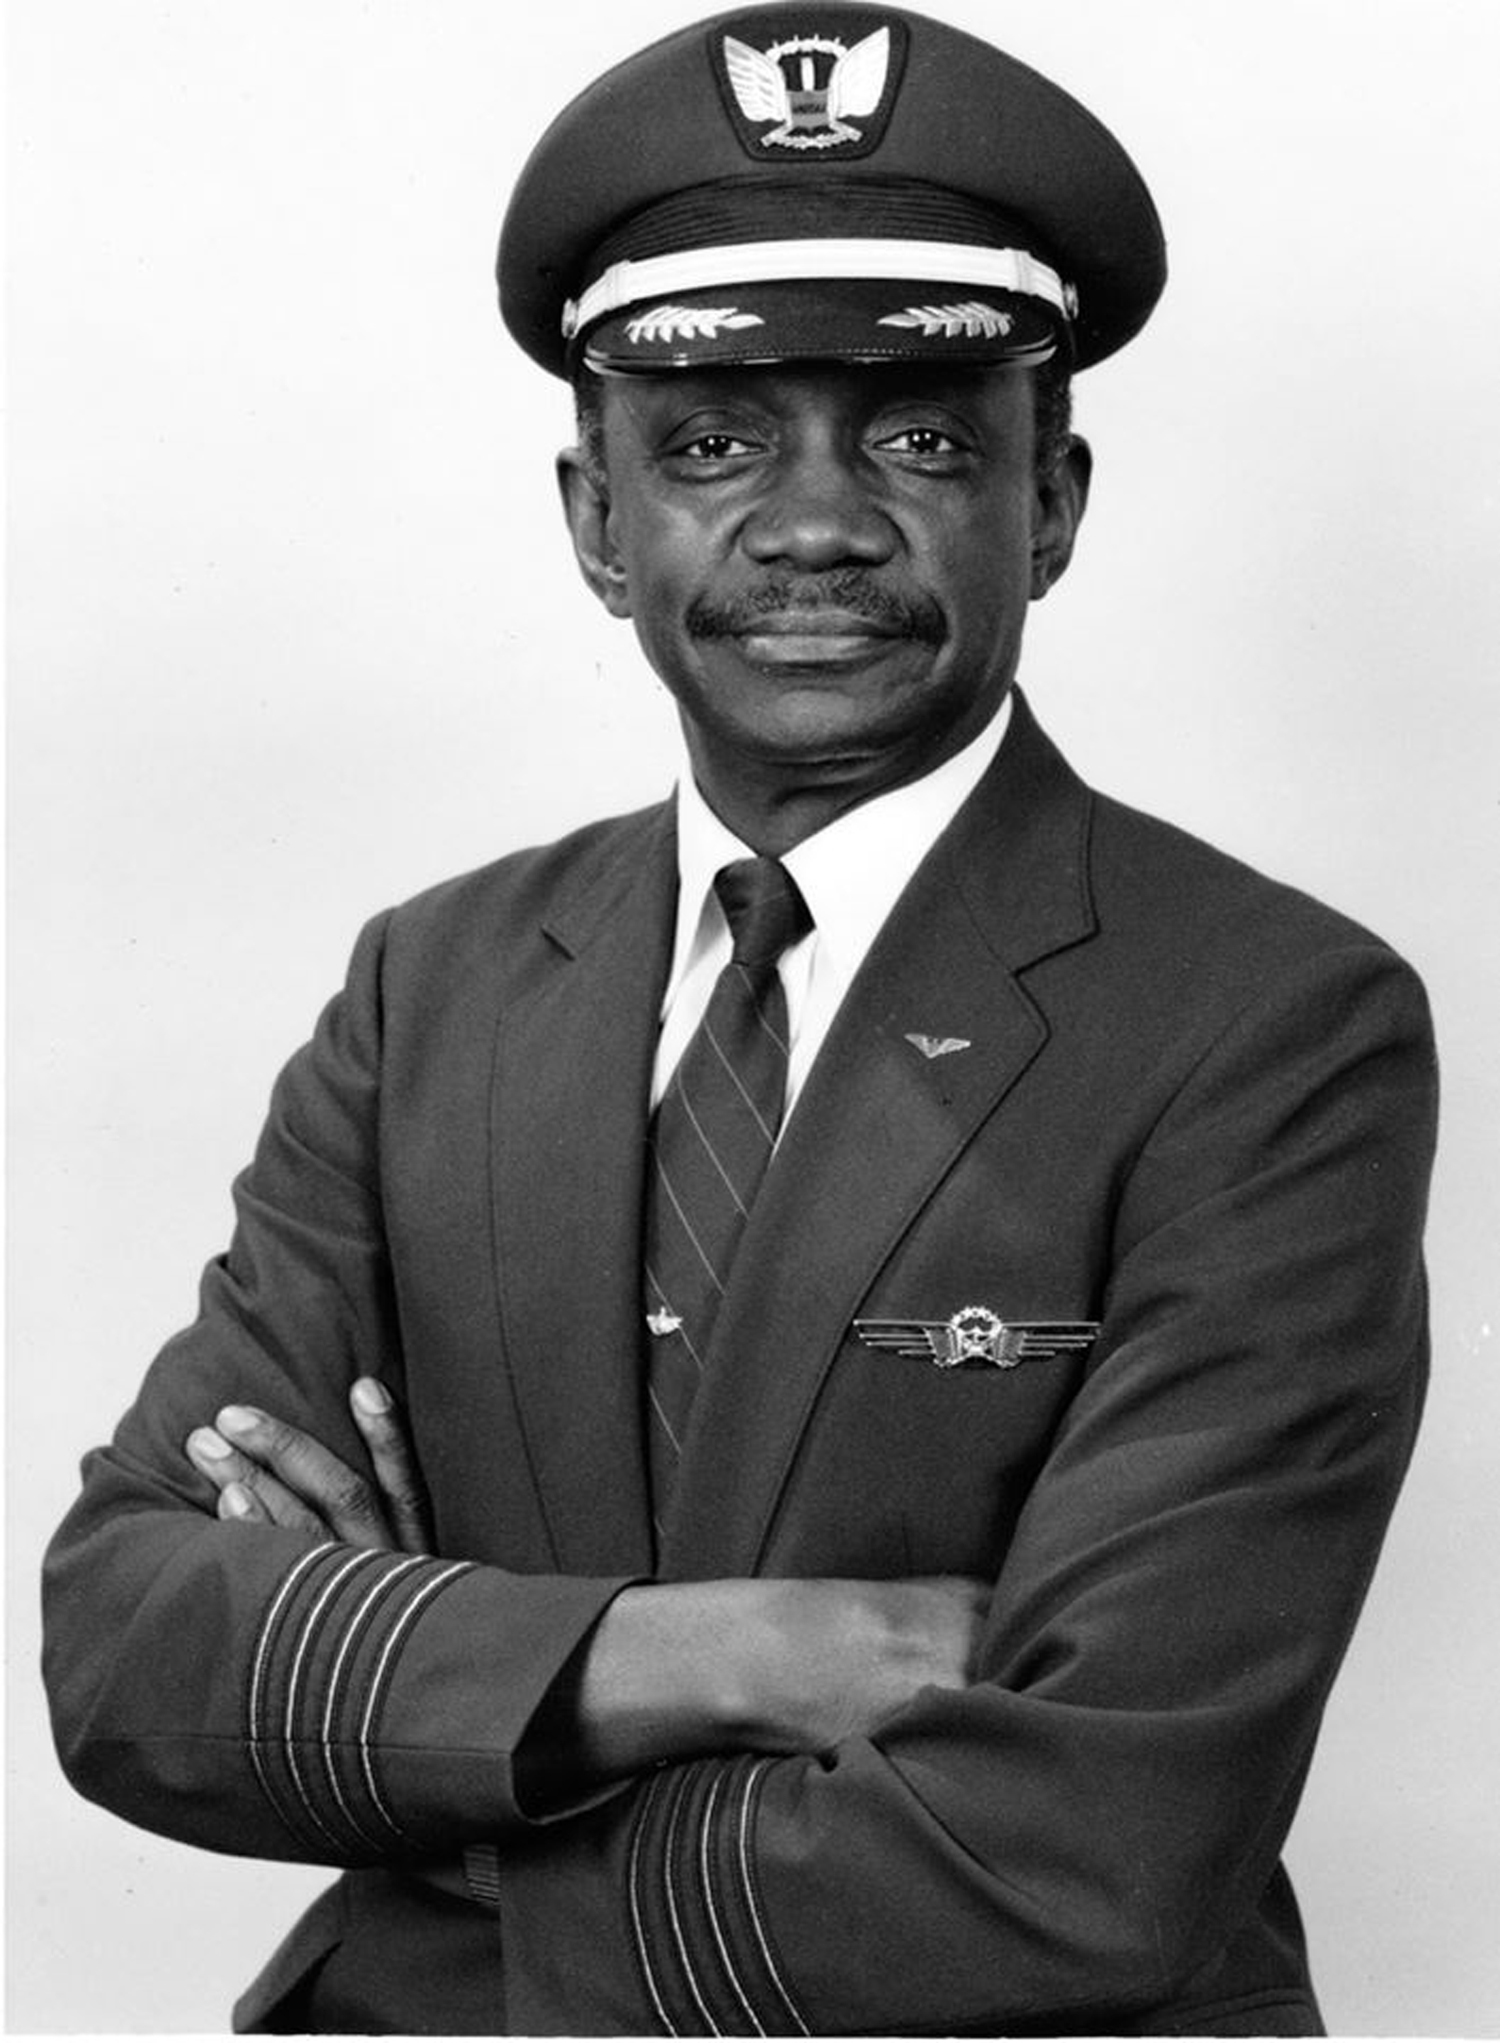 Captain George Winslow Nixon